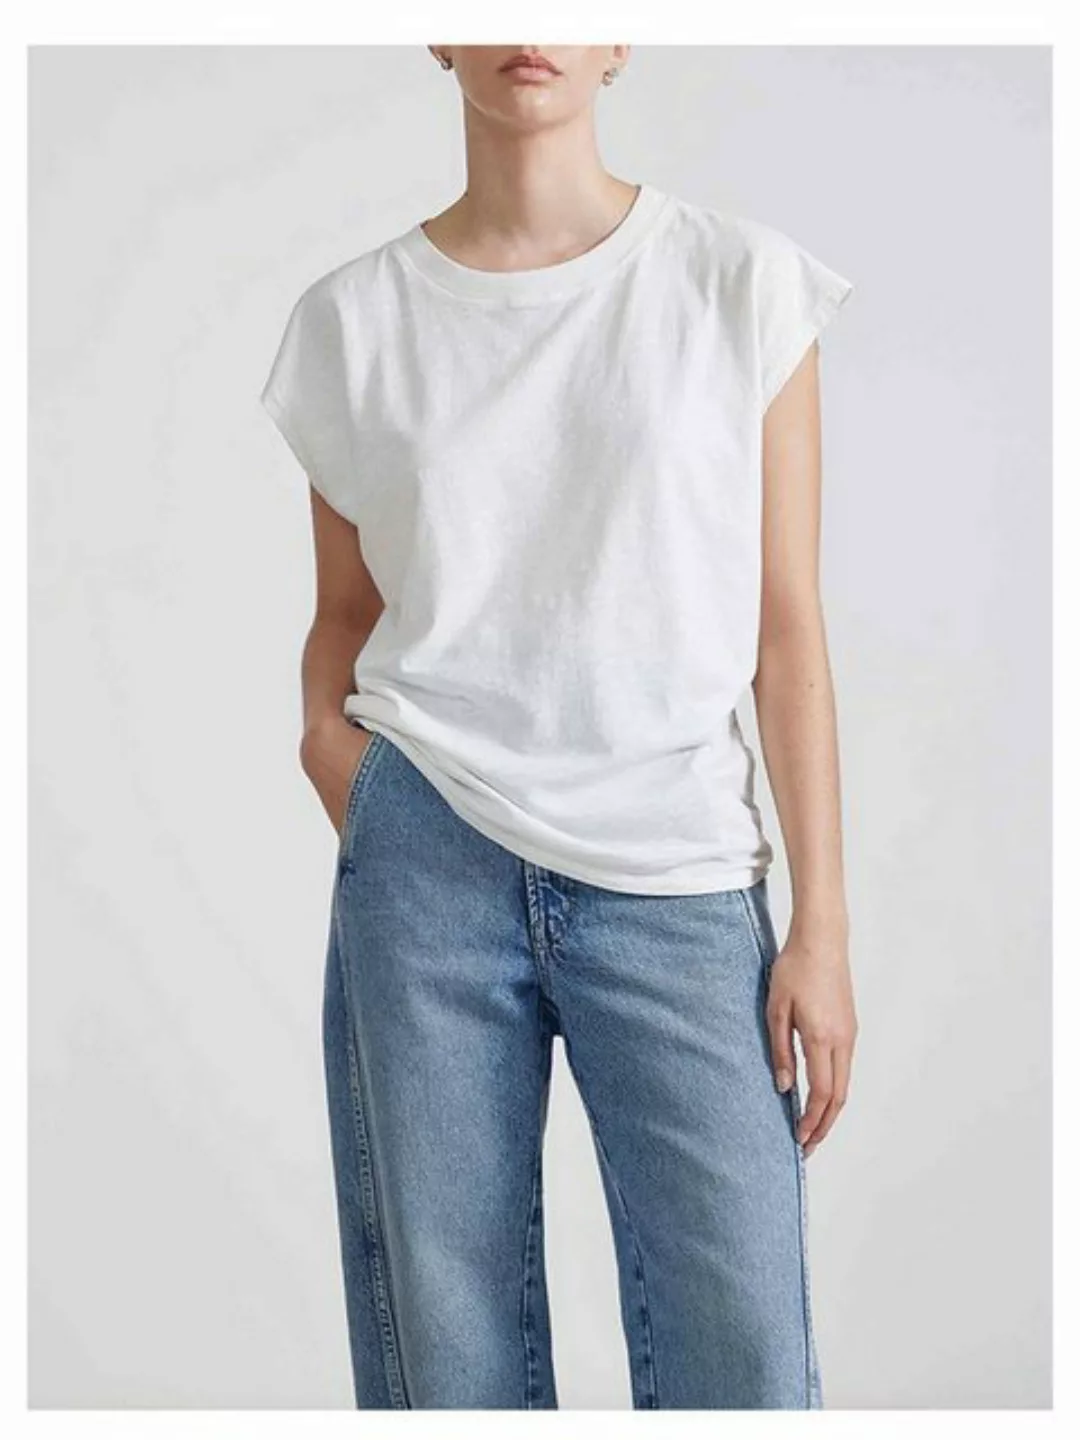 RUZU UG Blusentop Shirtbluse Damen-T-Shirt Ärmeln Rundhalsausschnitt günstig online kaufen